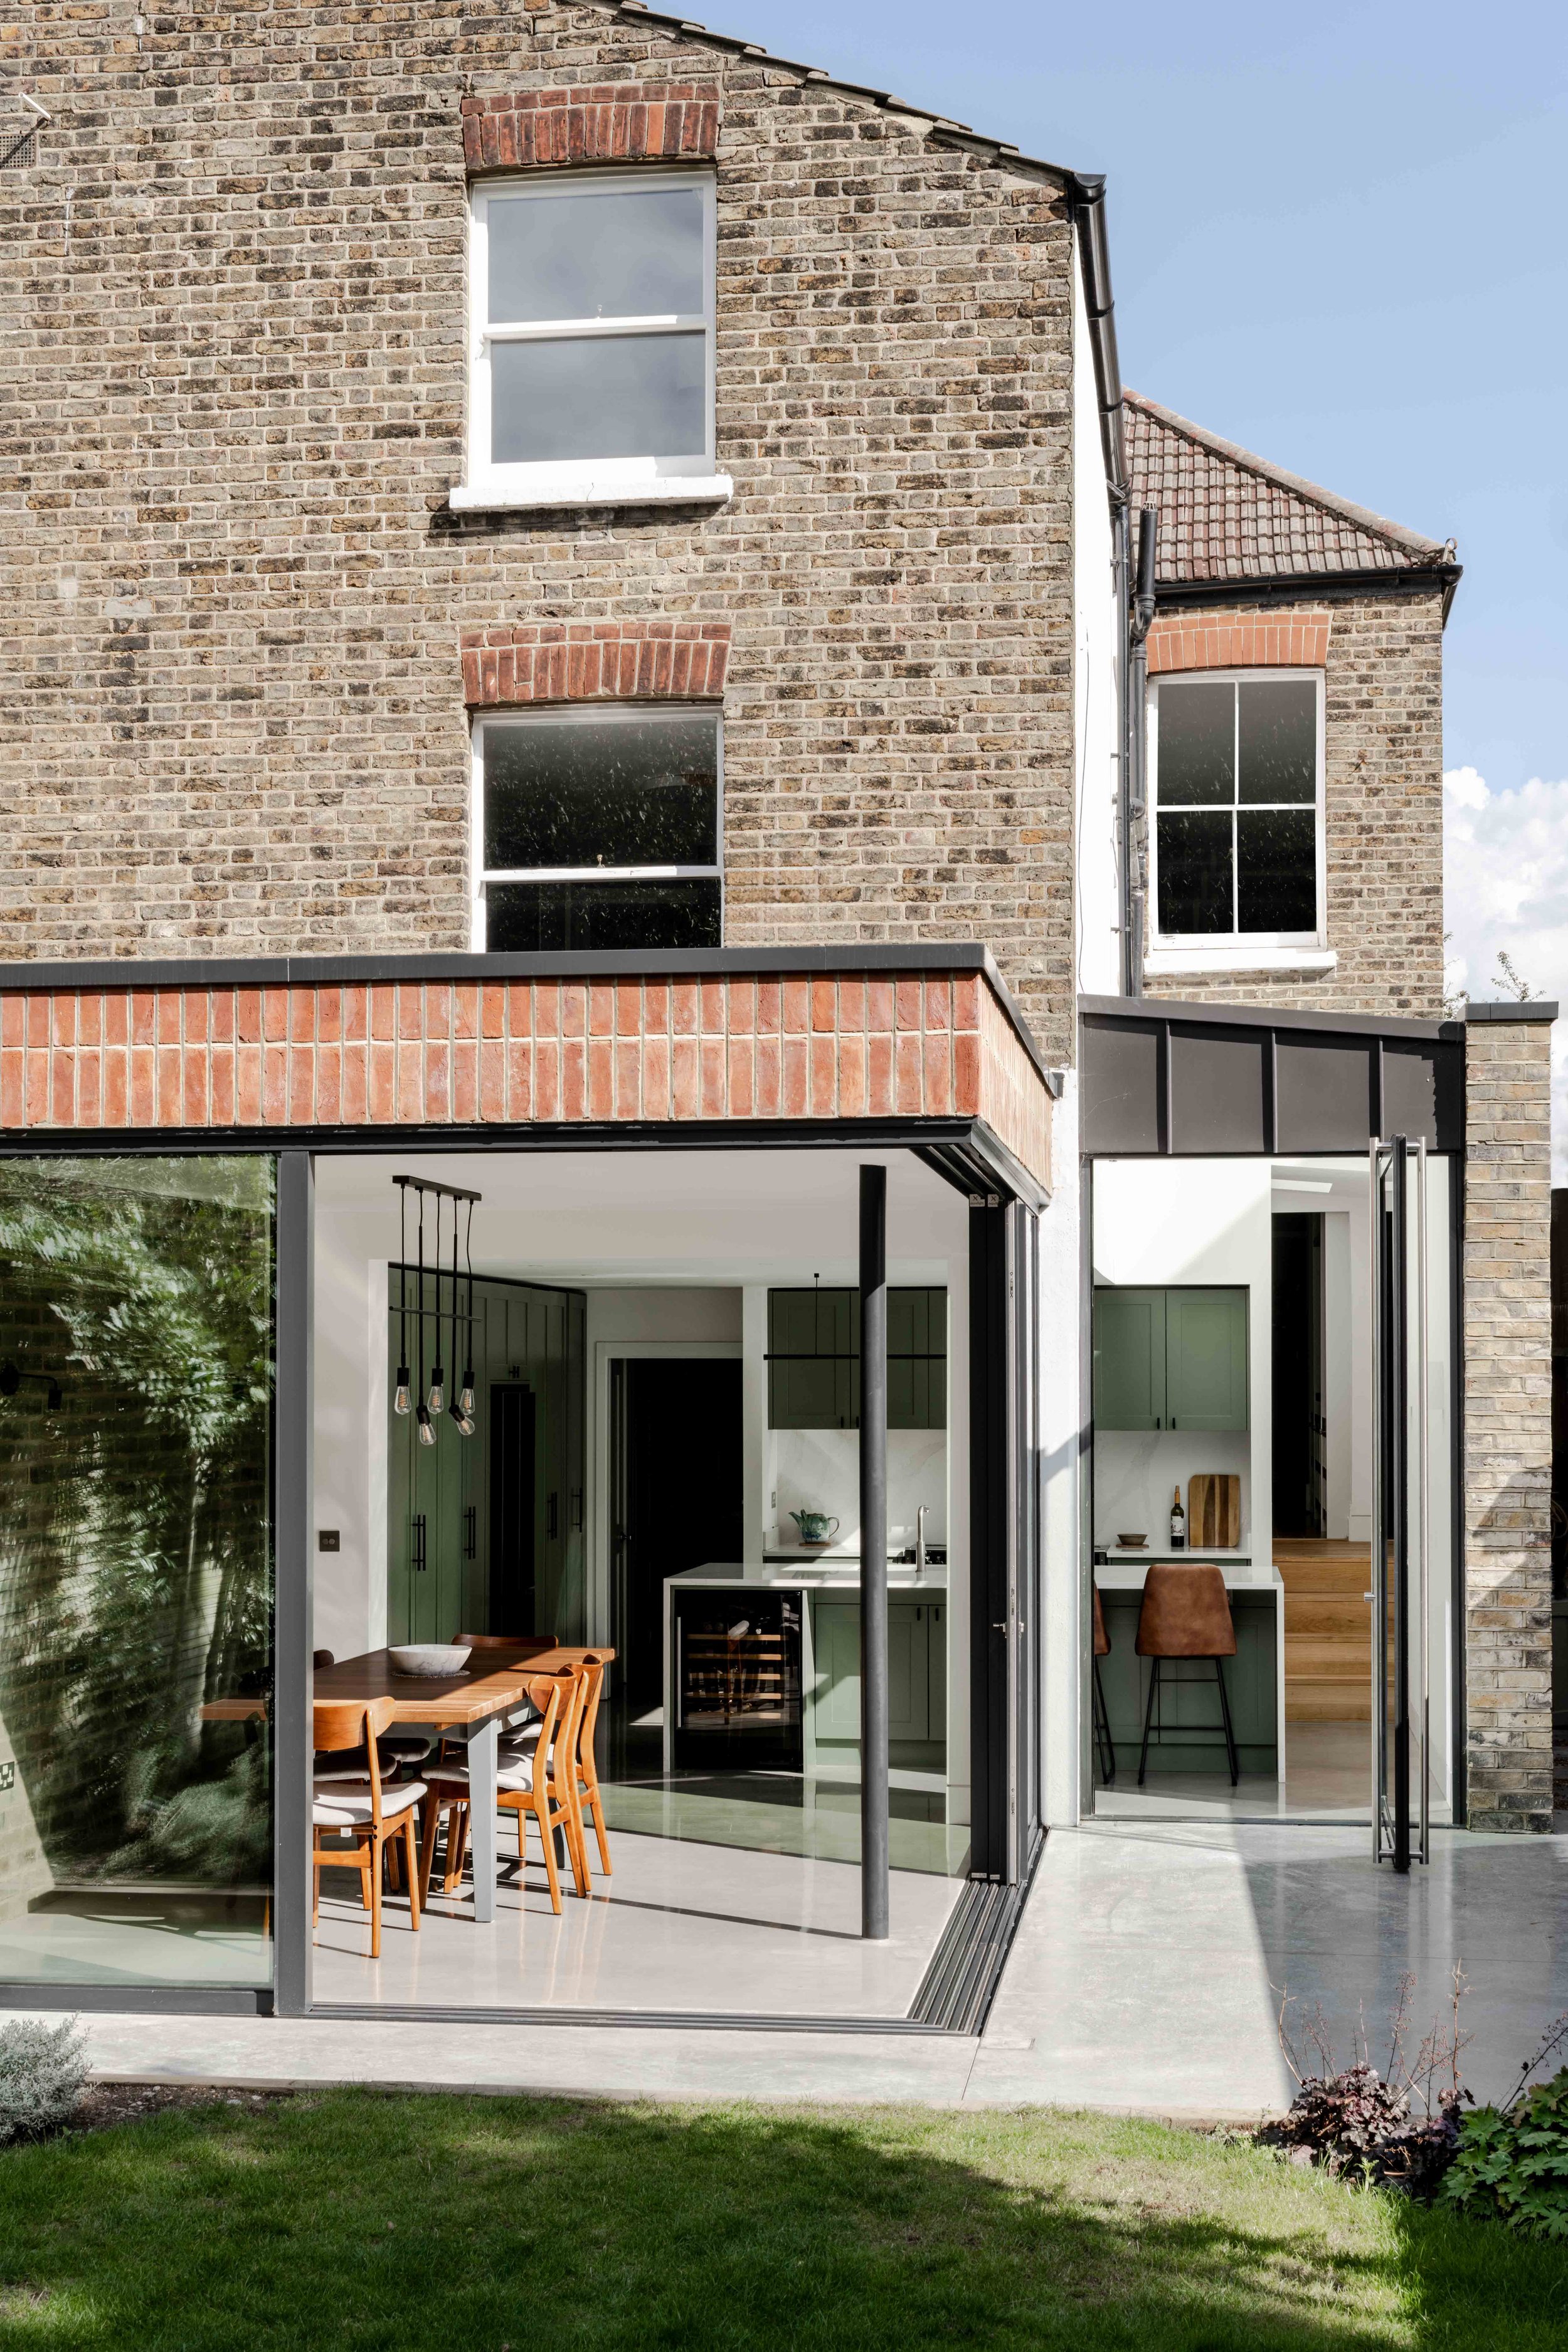 15-dulwich-house-victorian-semi-kitchen-extension-exterior-rear-architecture-lambeth-london-uk-rider-stirland-architects.jpg